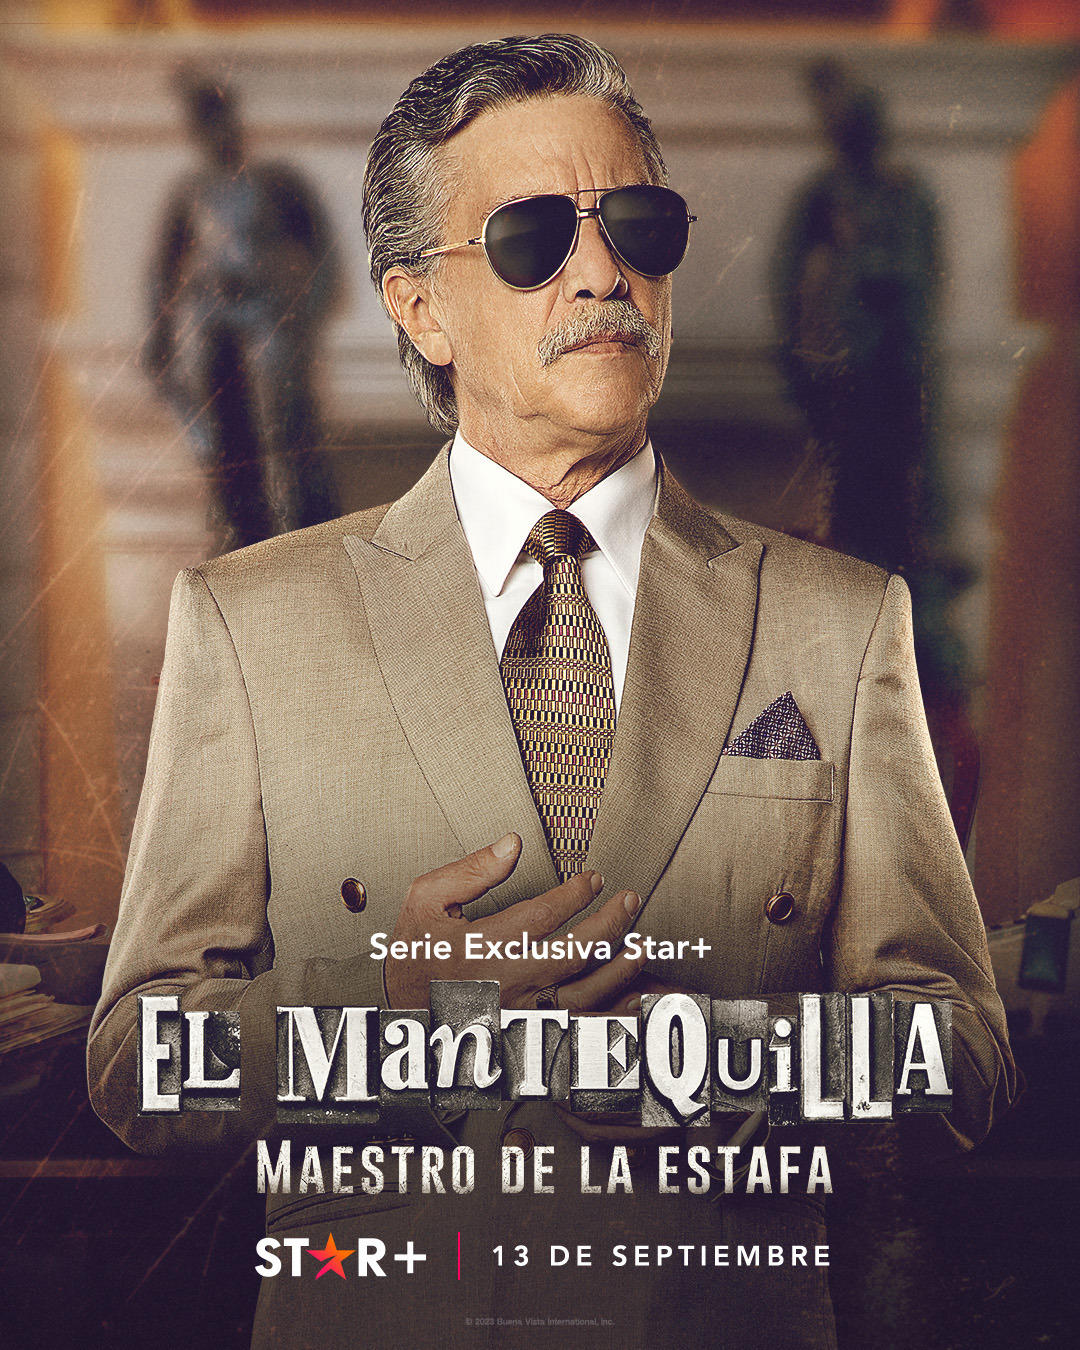 Extra Large TV Poster Image for El Mantequilla: Maestro De La Estafa (#5 of 5)